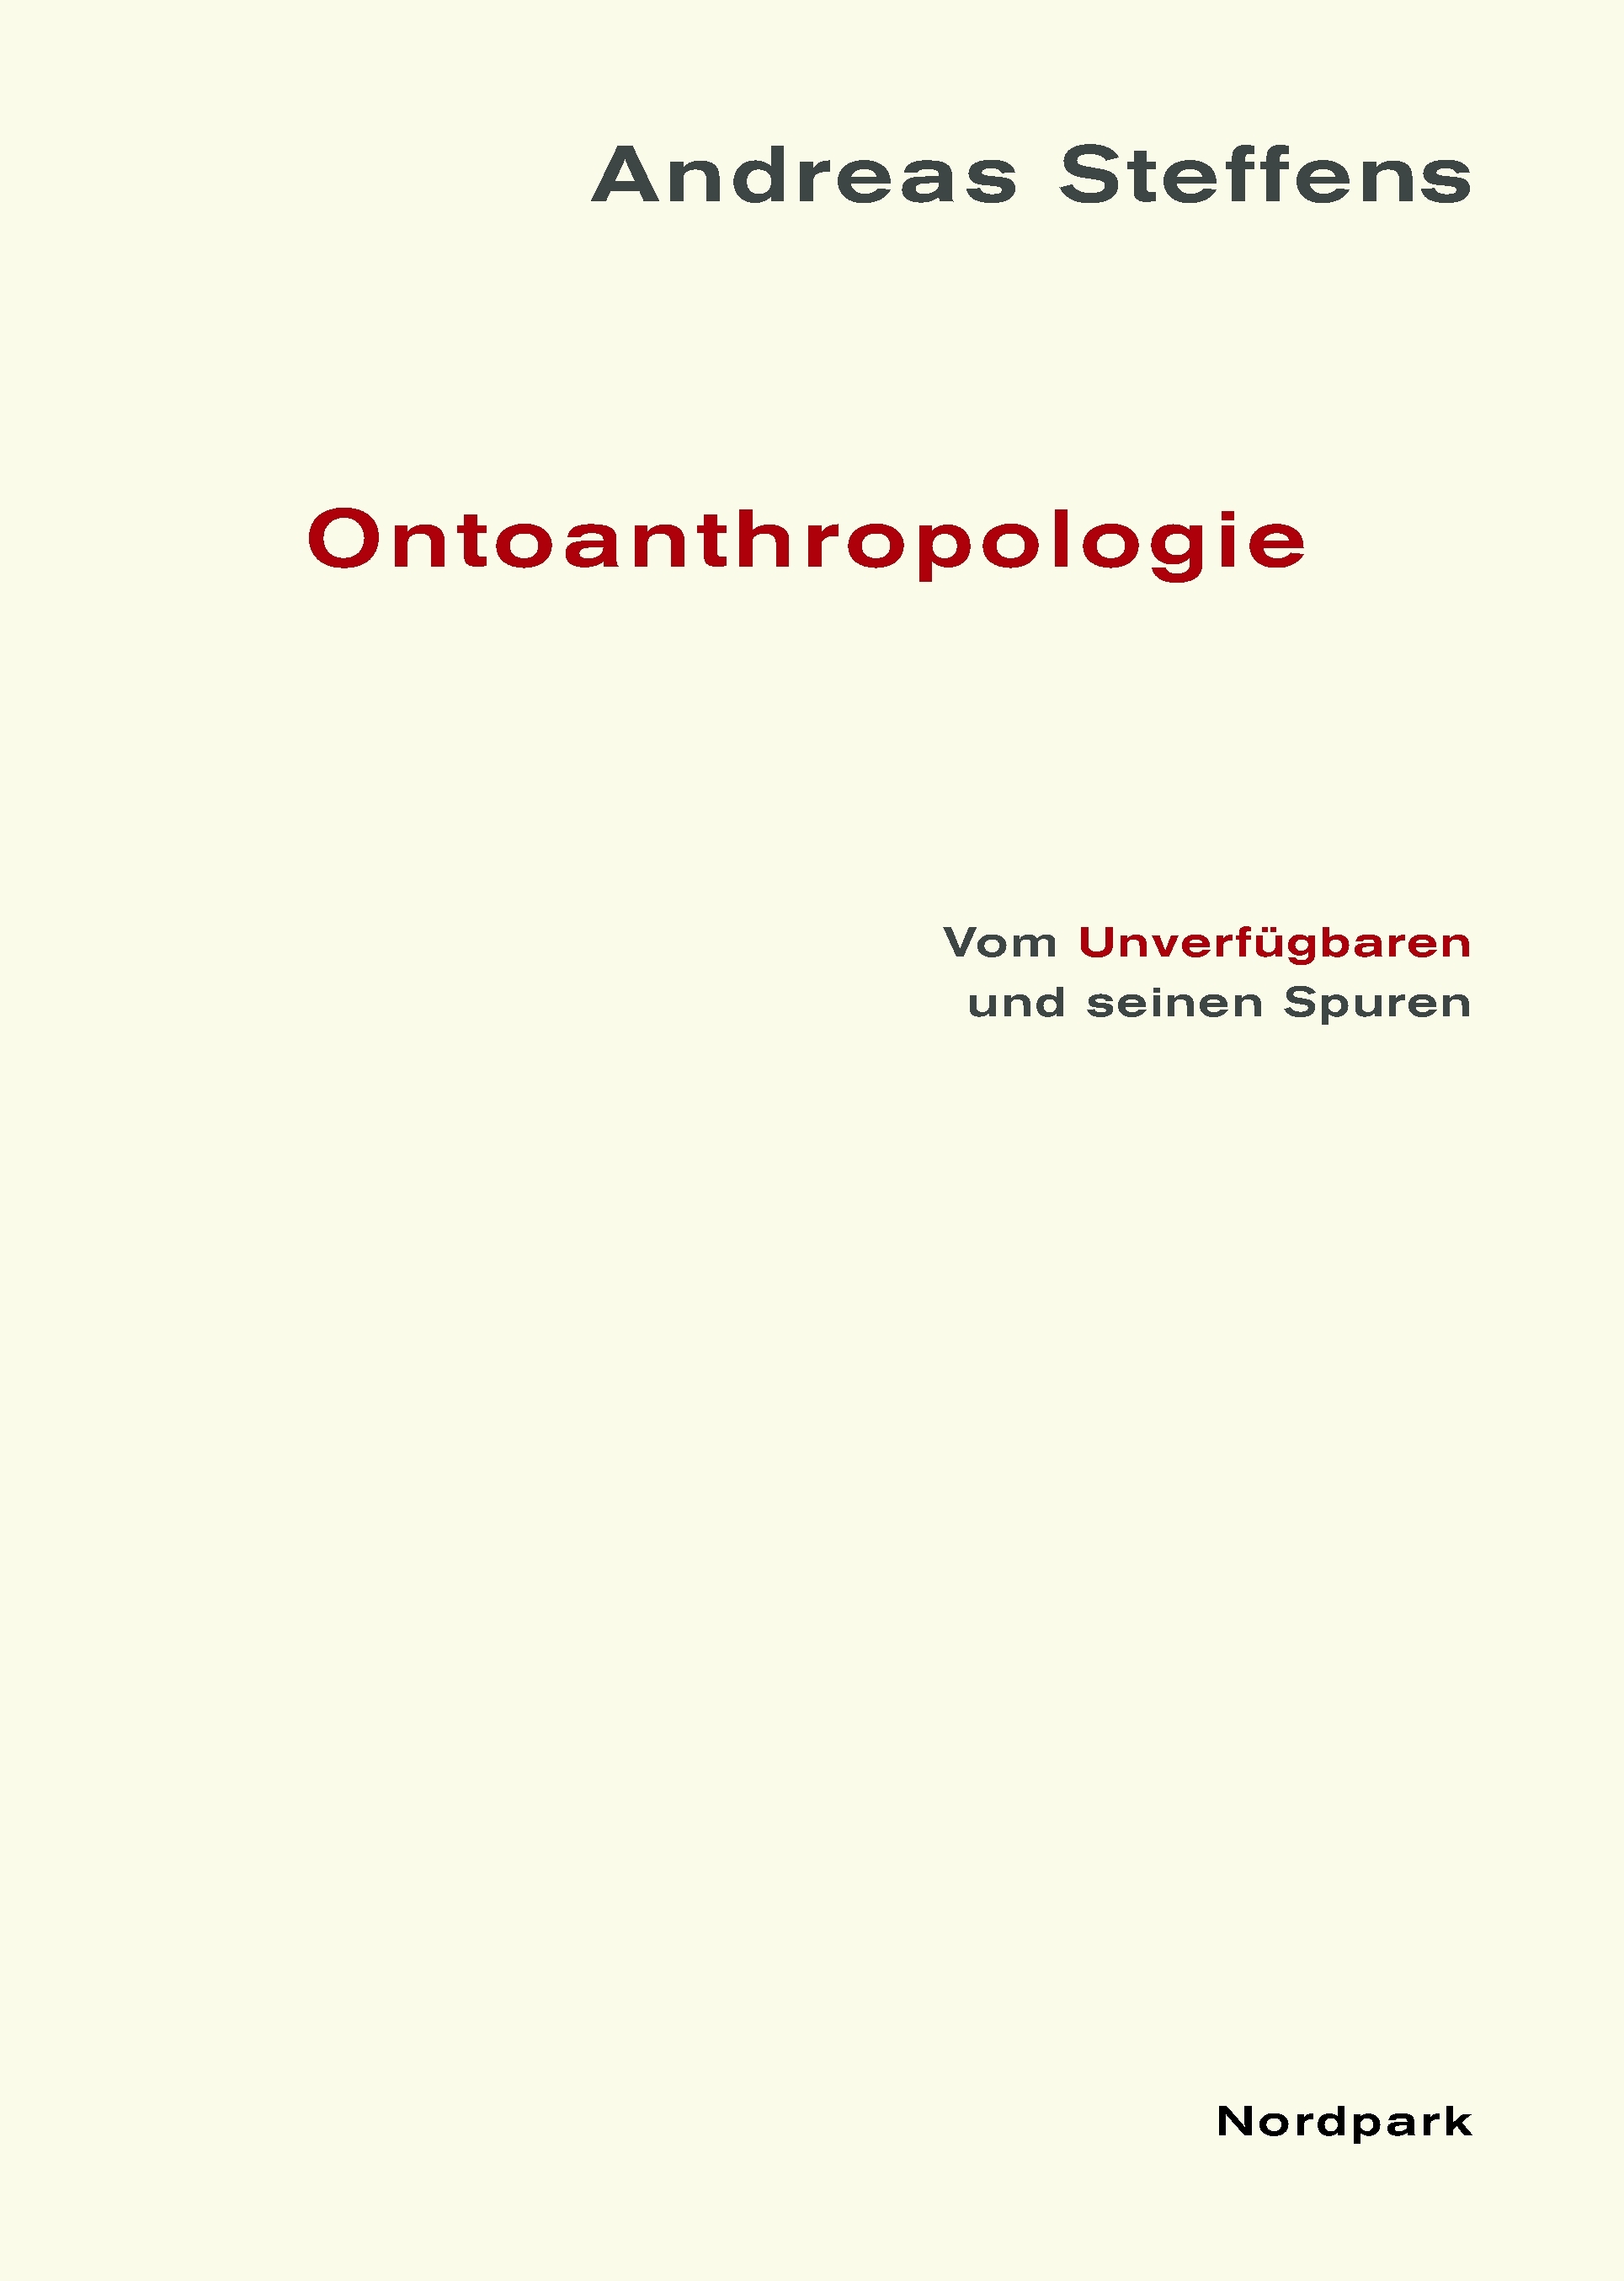 steffens-ontoanthropologie-cover-web.jpg